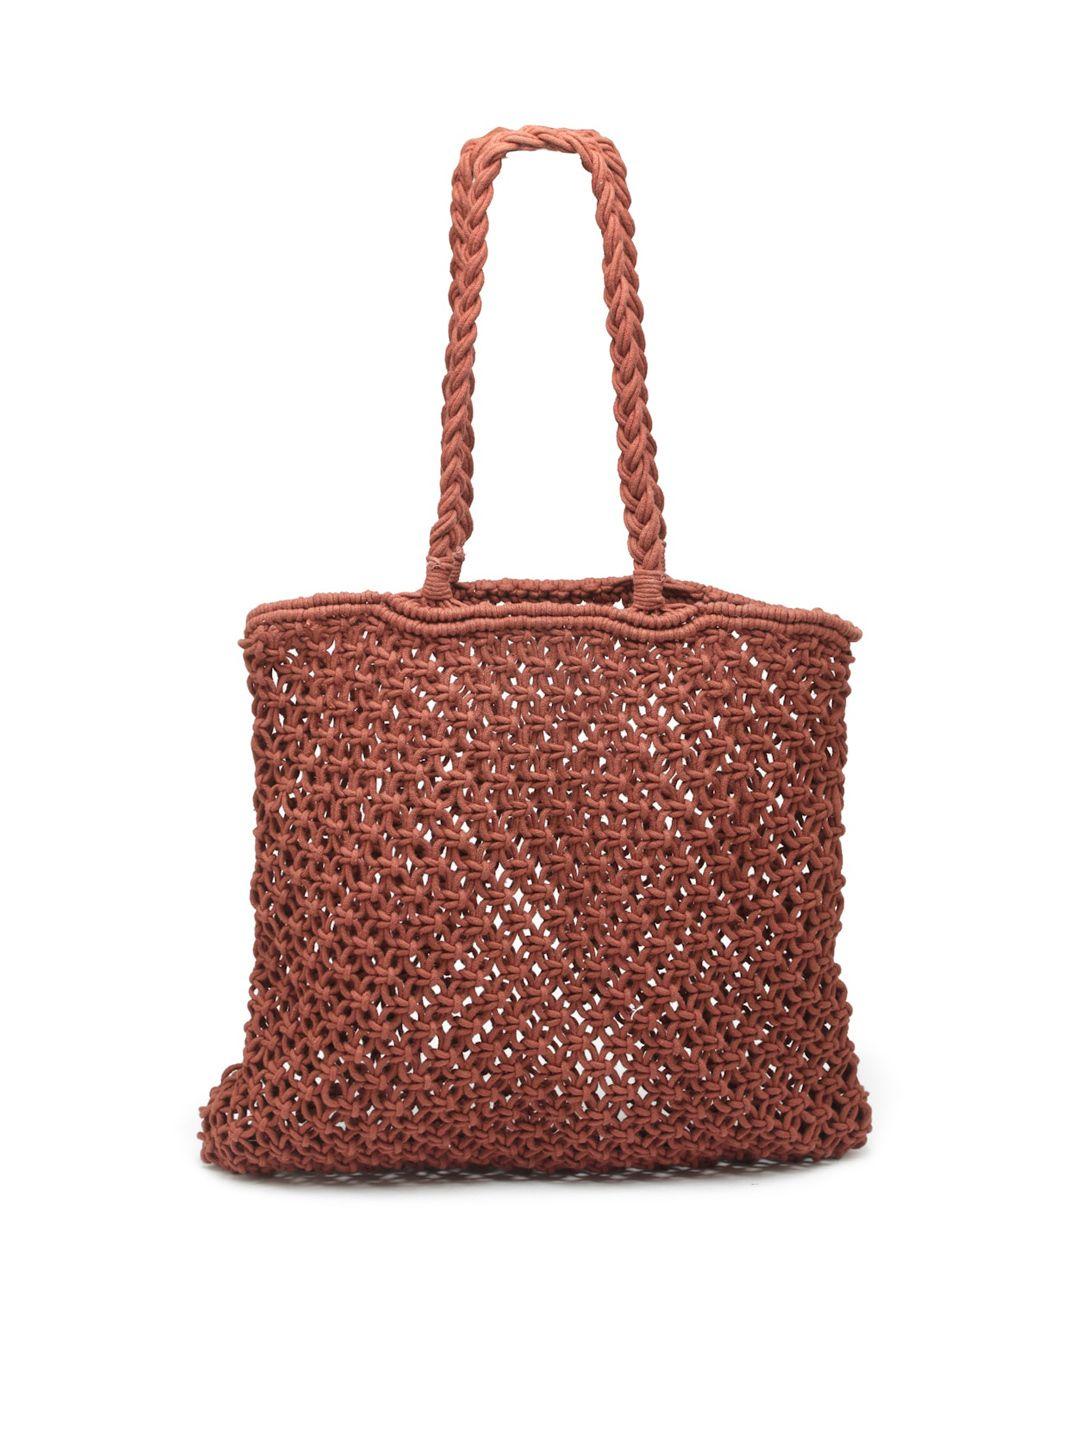 arrabi brown textured oversized structured shoulder bag with cut work